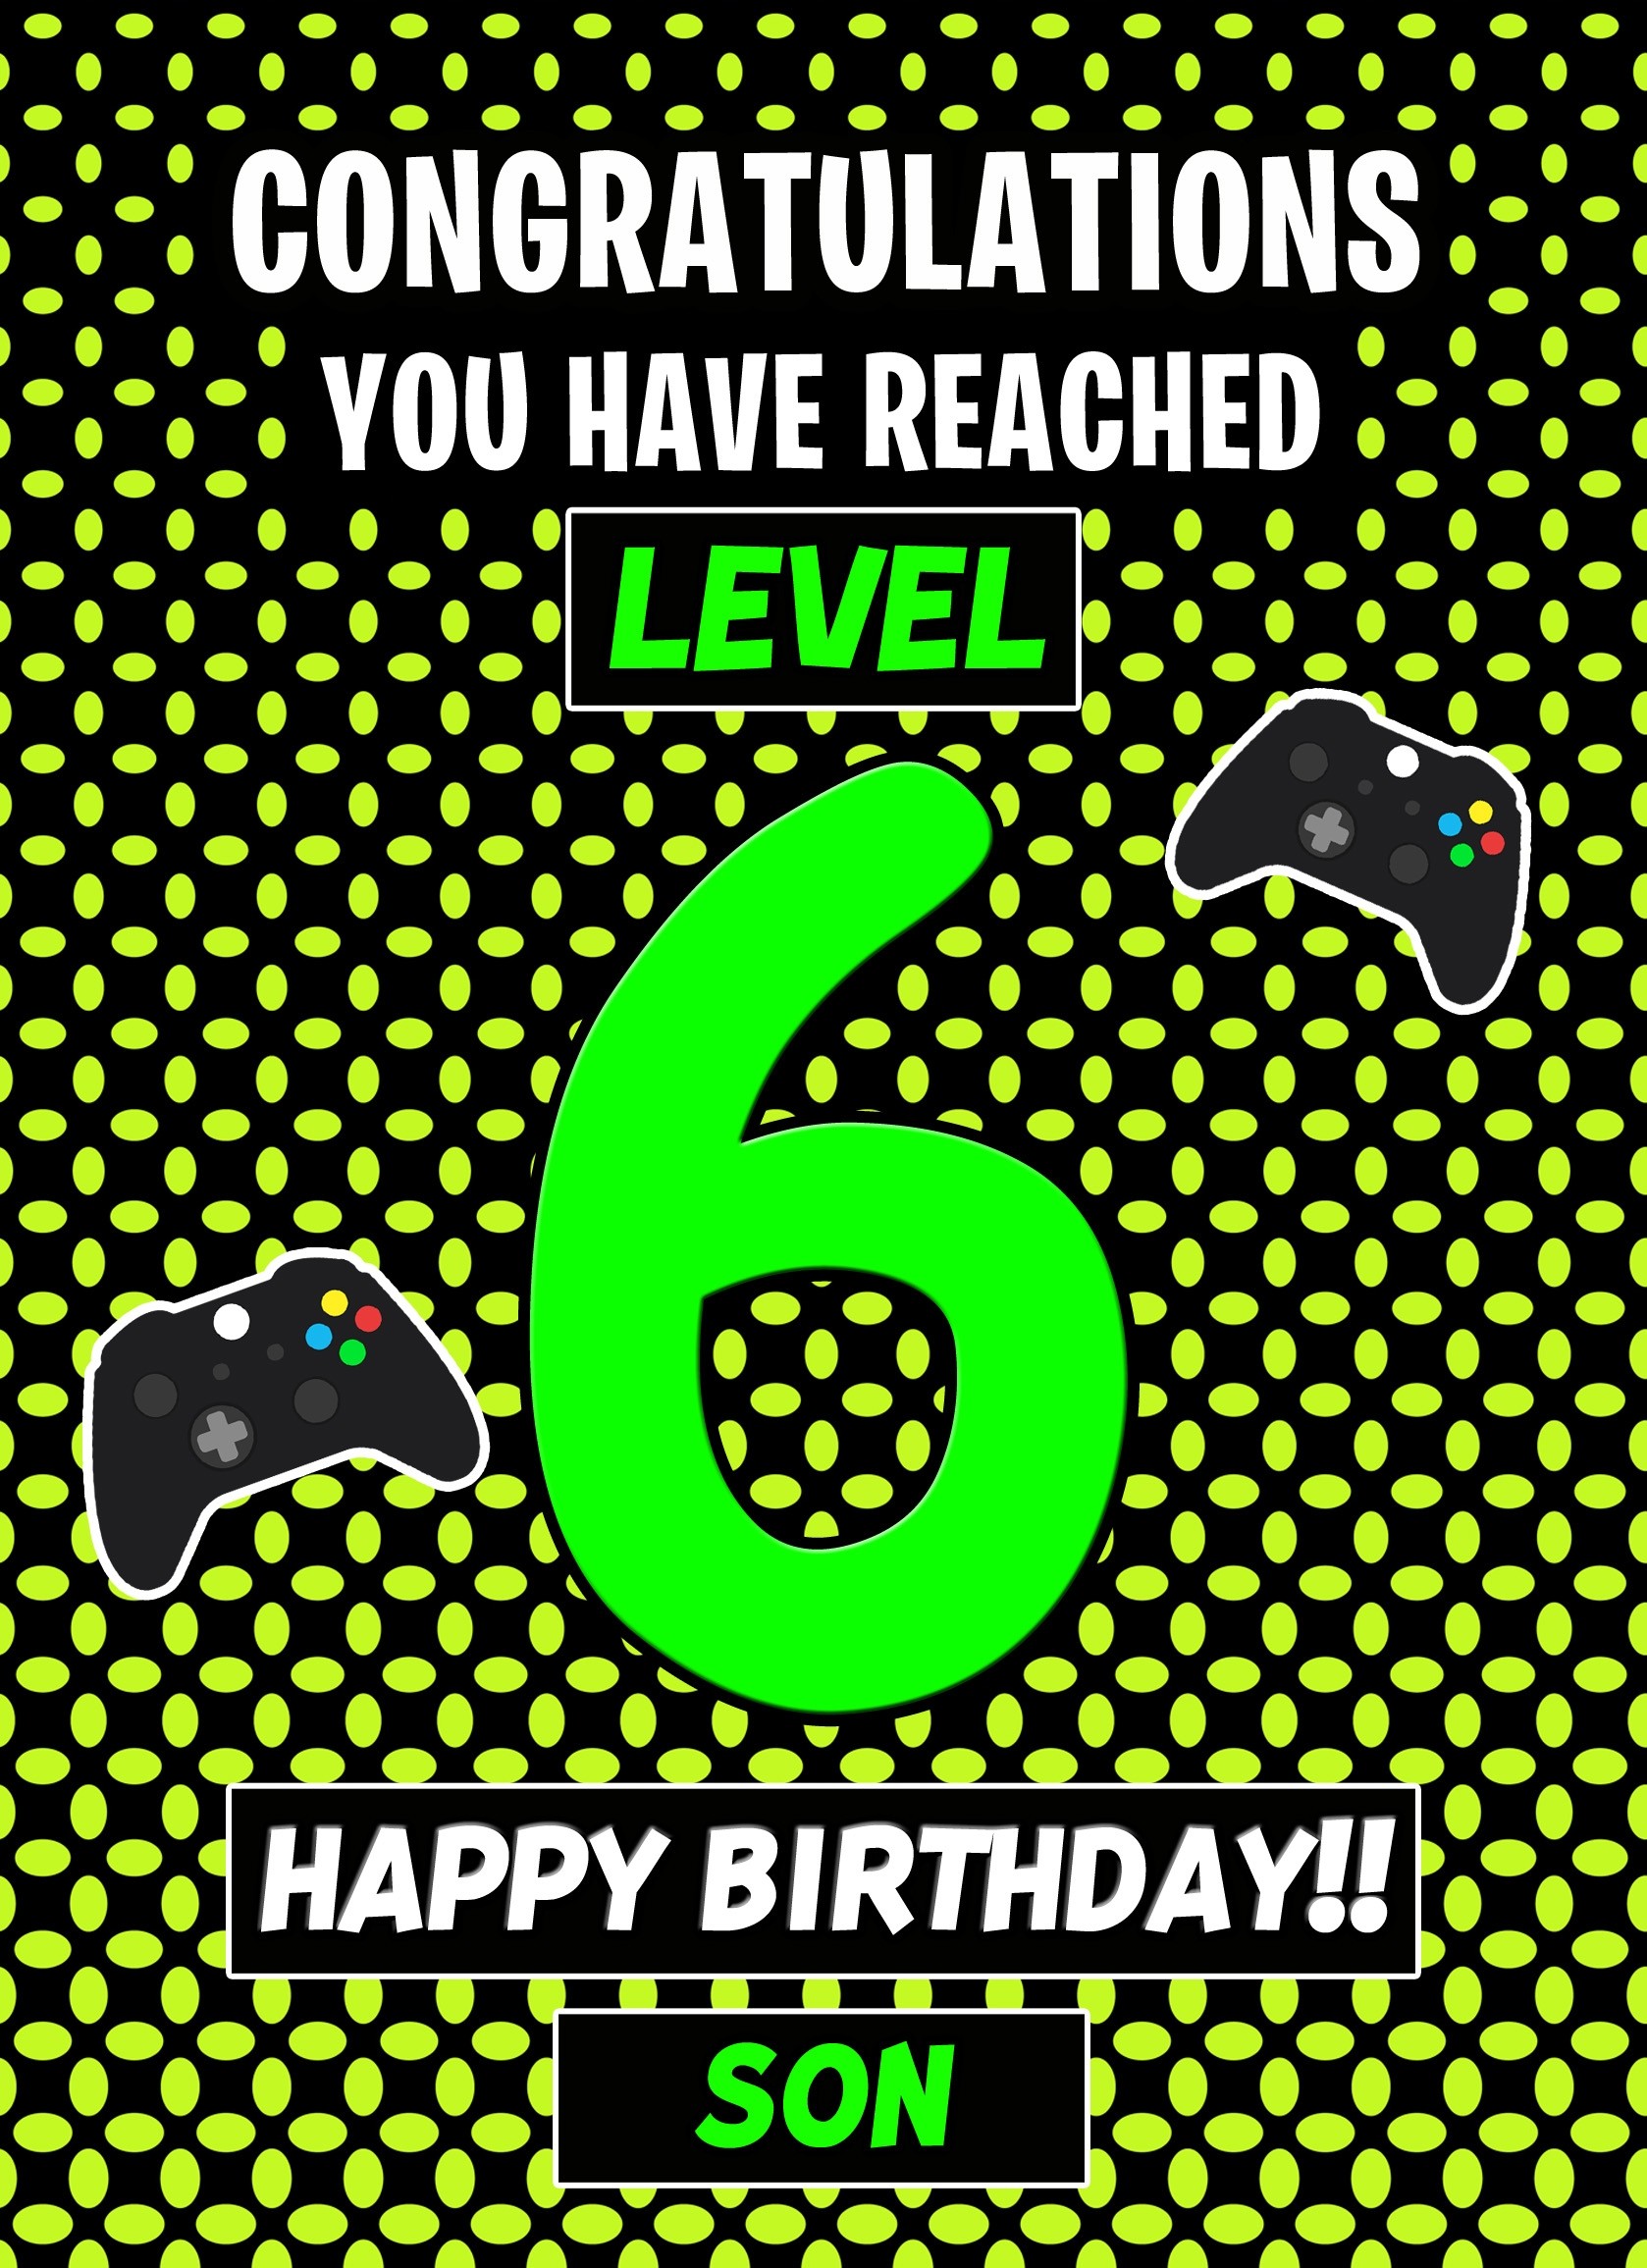 6th Level Gamer Birthday Card (Son)